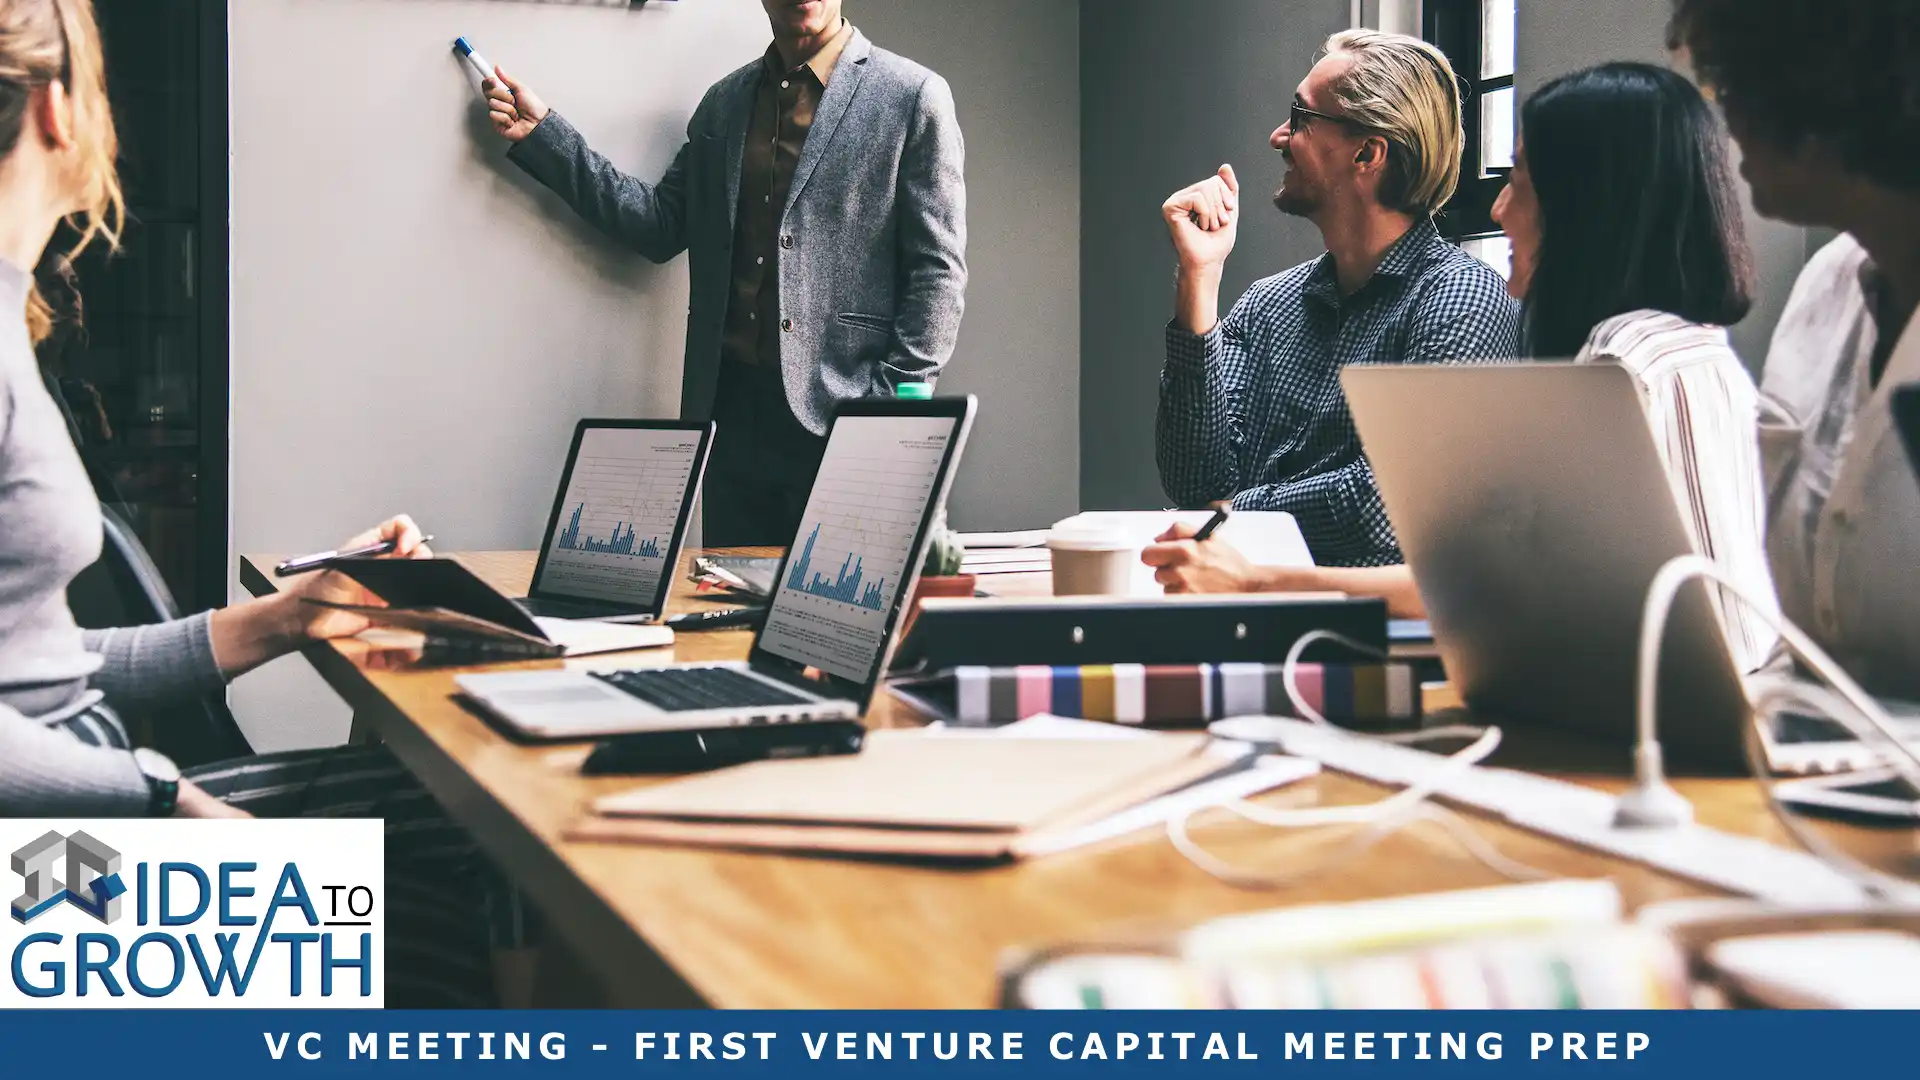 VC MEETING - FIRST VENTURE CAPITAL MEETING PREP